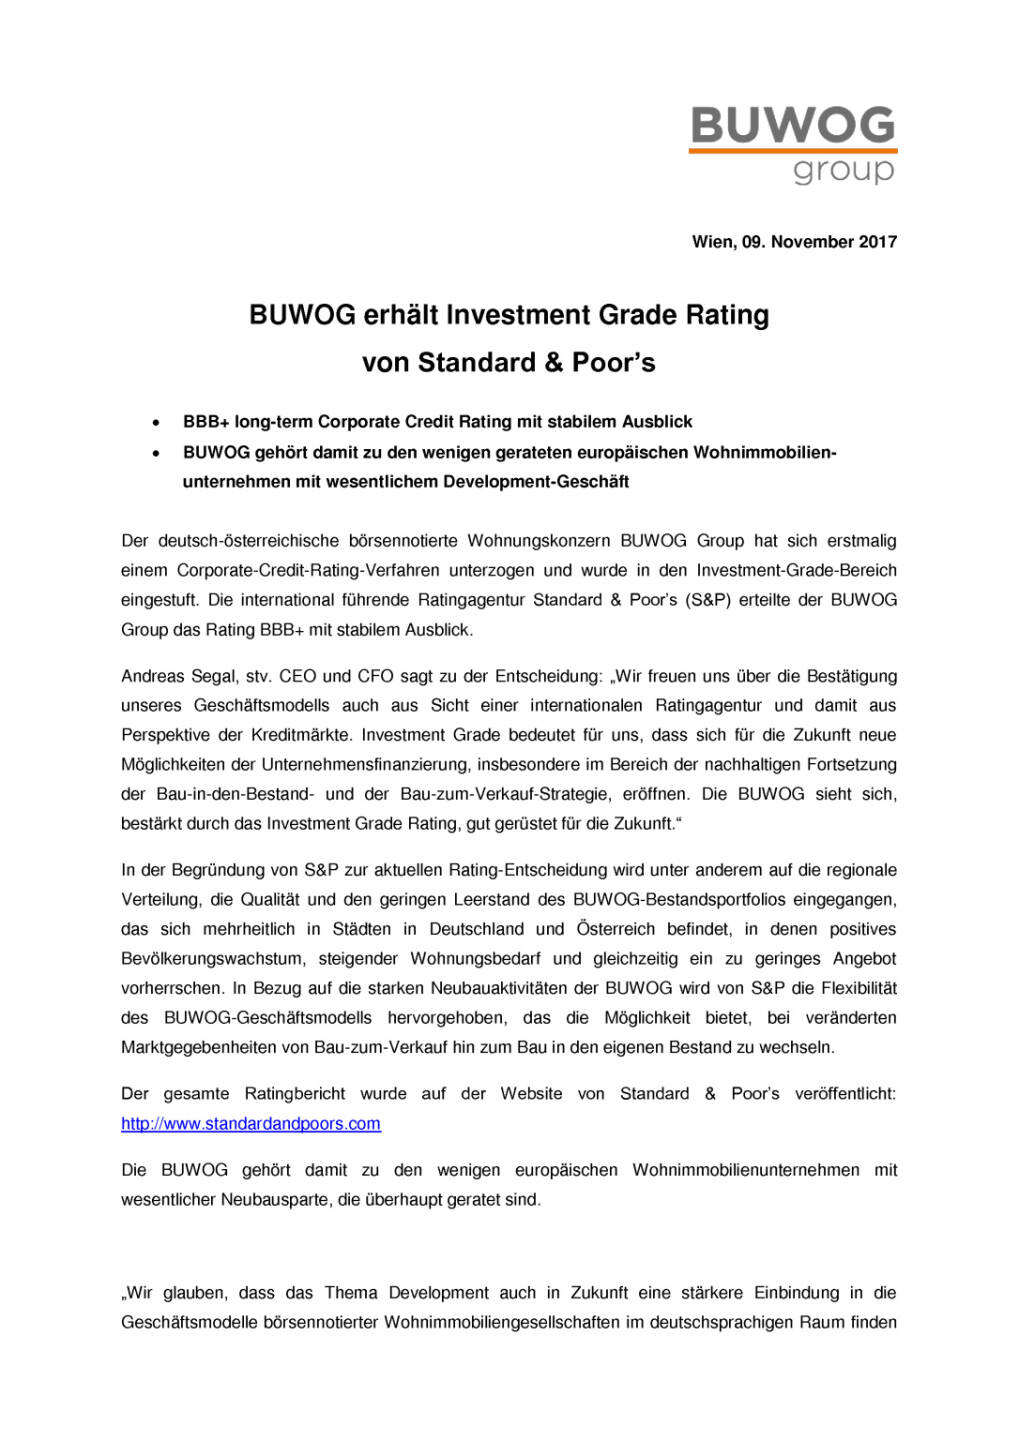 Buwog Group erhält Investment Grade Rating von S&P, Seite 1/2, komplettes Dokument unter http://boerse-social.com/static/uploads/file_2387_buwog_group_erhalt_investment_grade_rating_von_sp.pdf